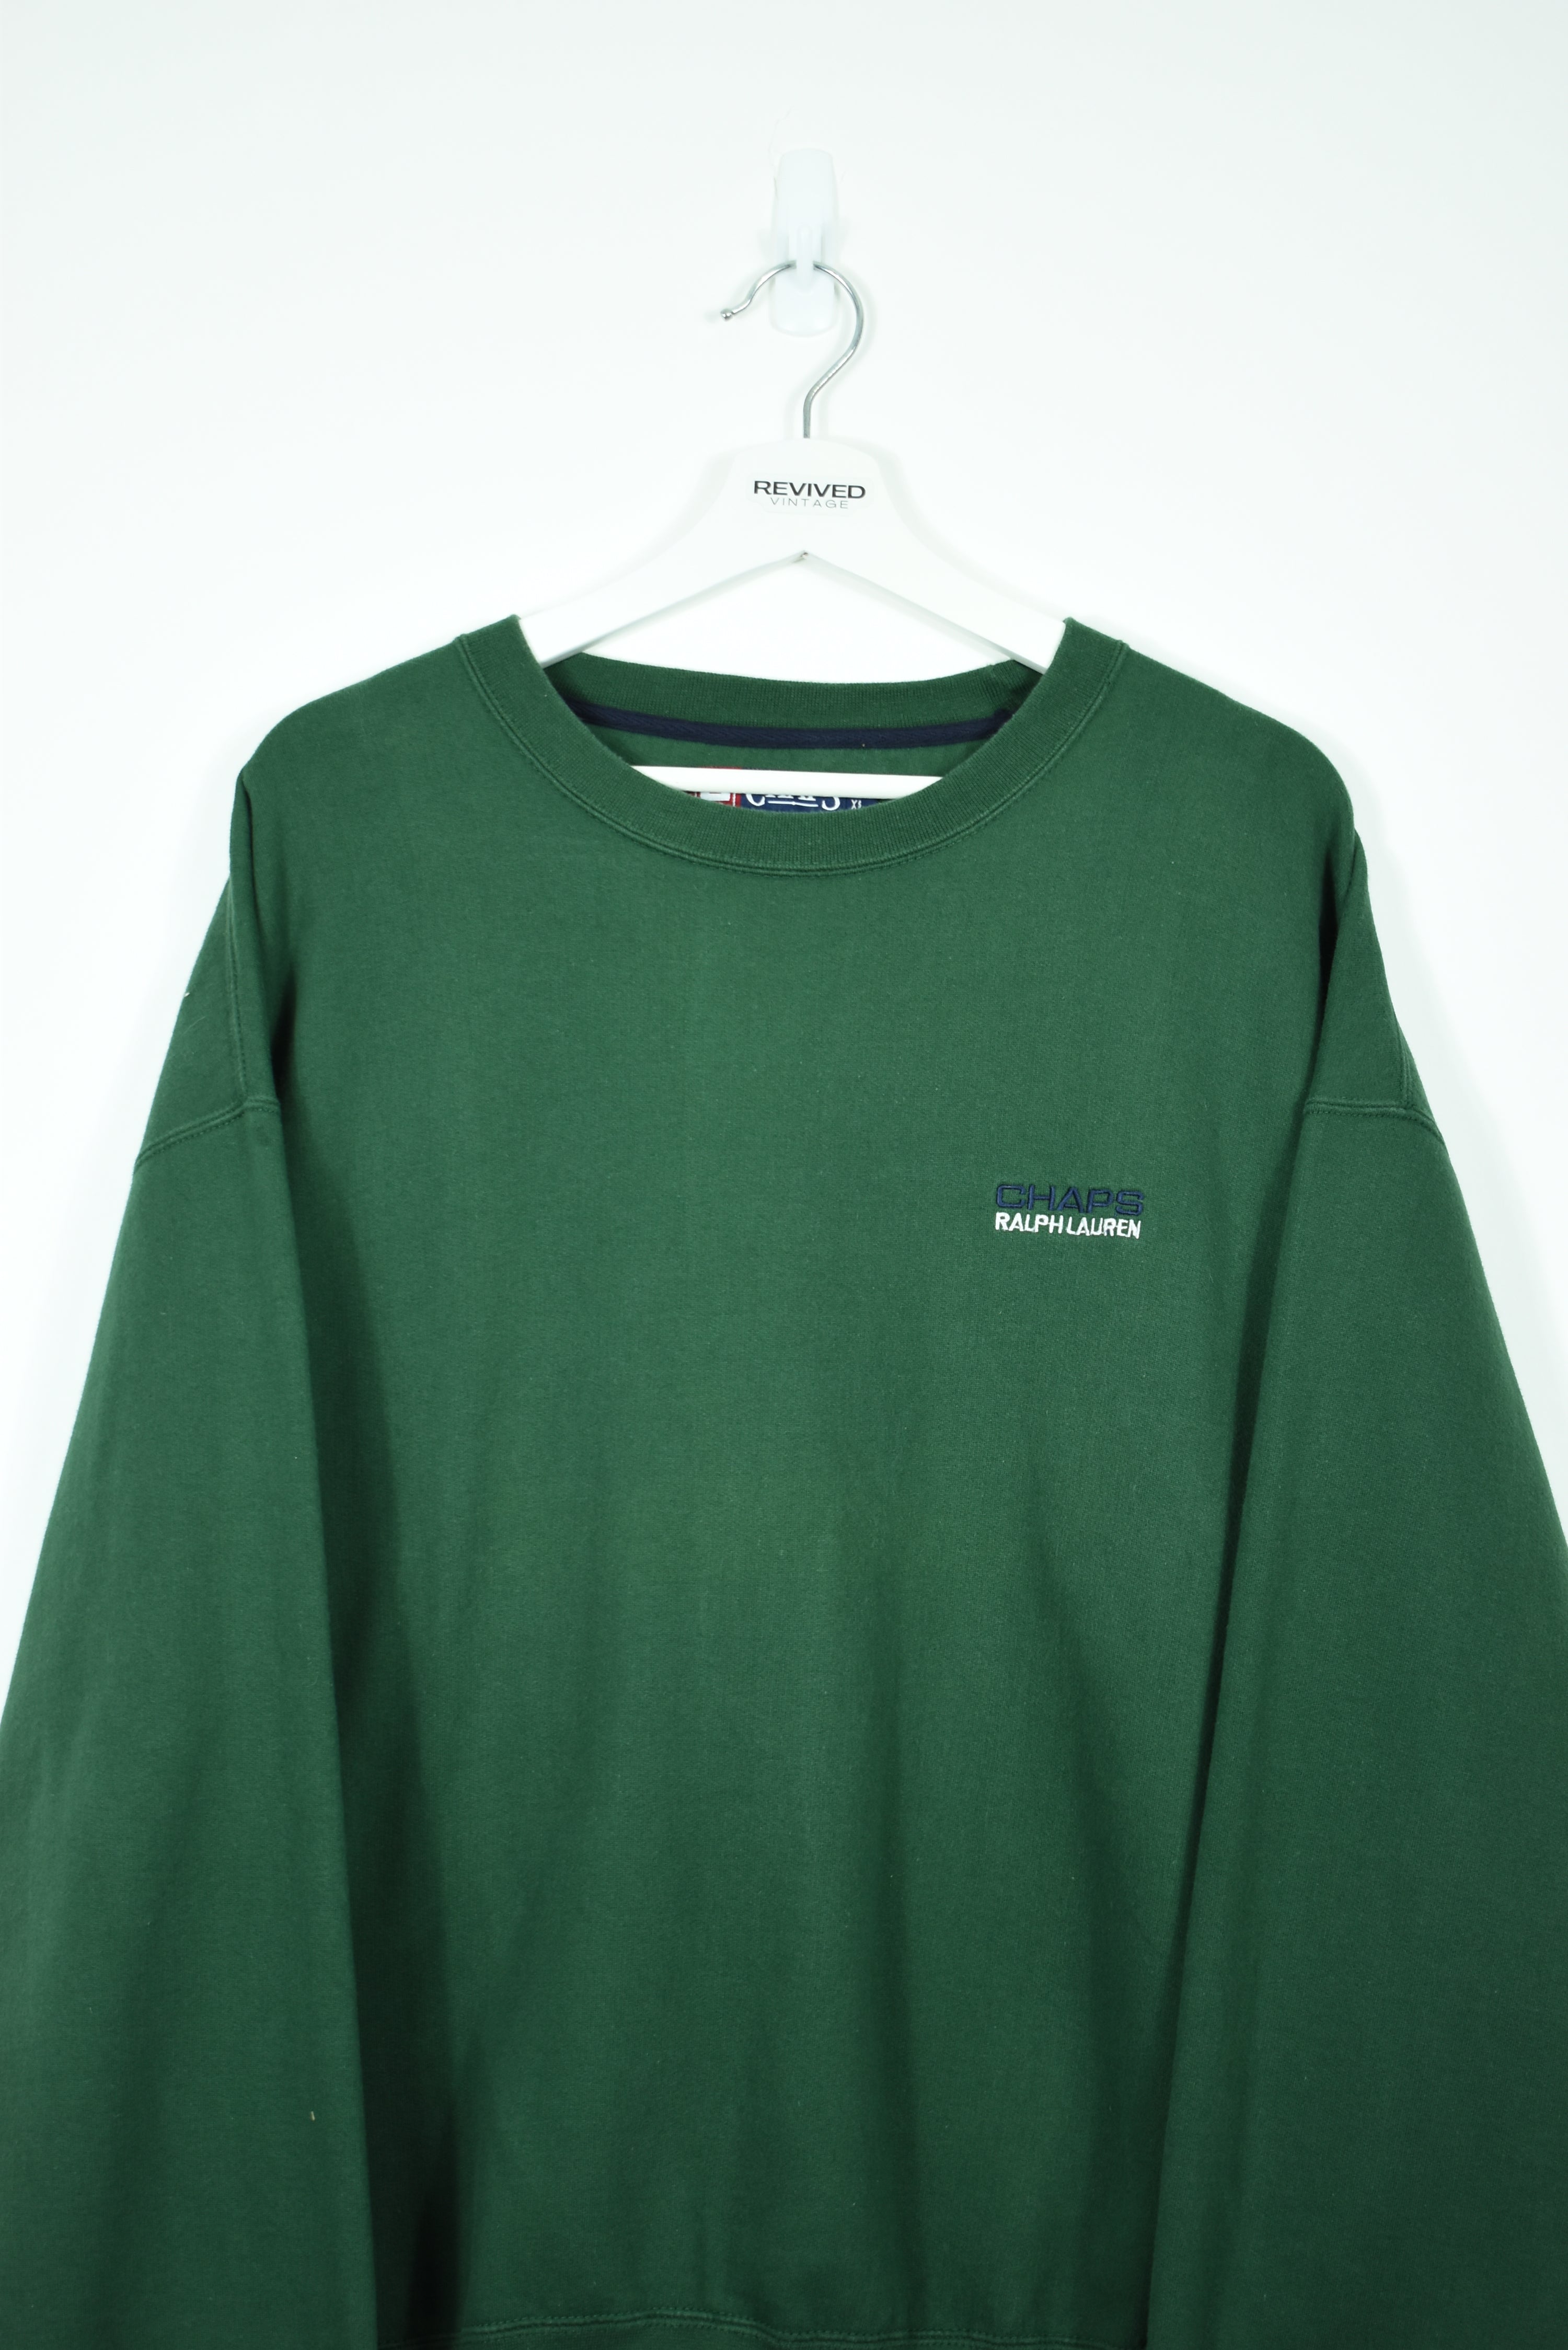 Vintage Chaps Ralph Lauren Embroidery Forrest Green Sweatshirt Xlarge